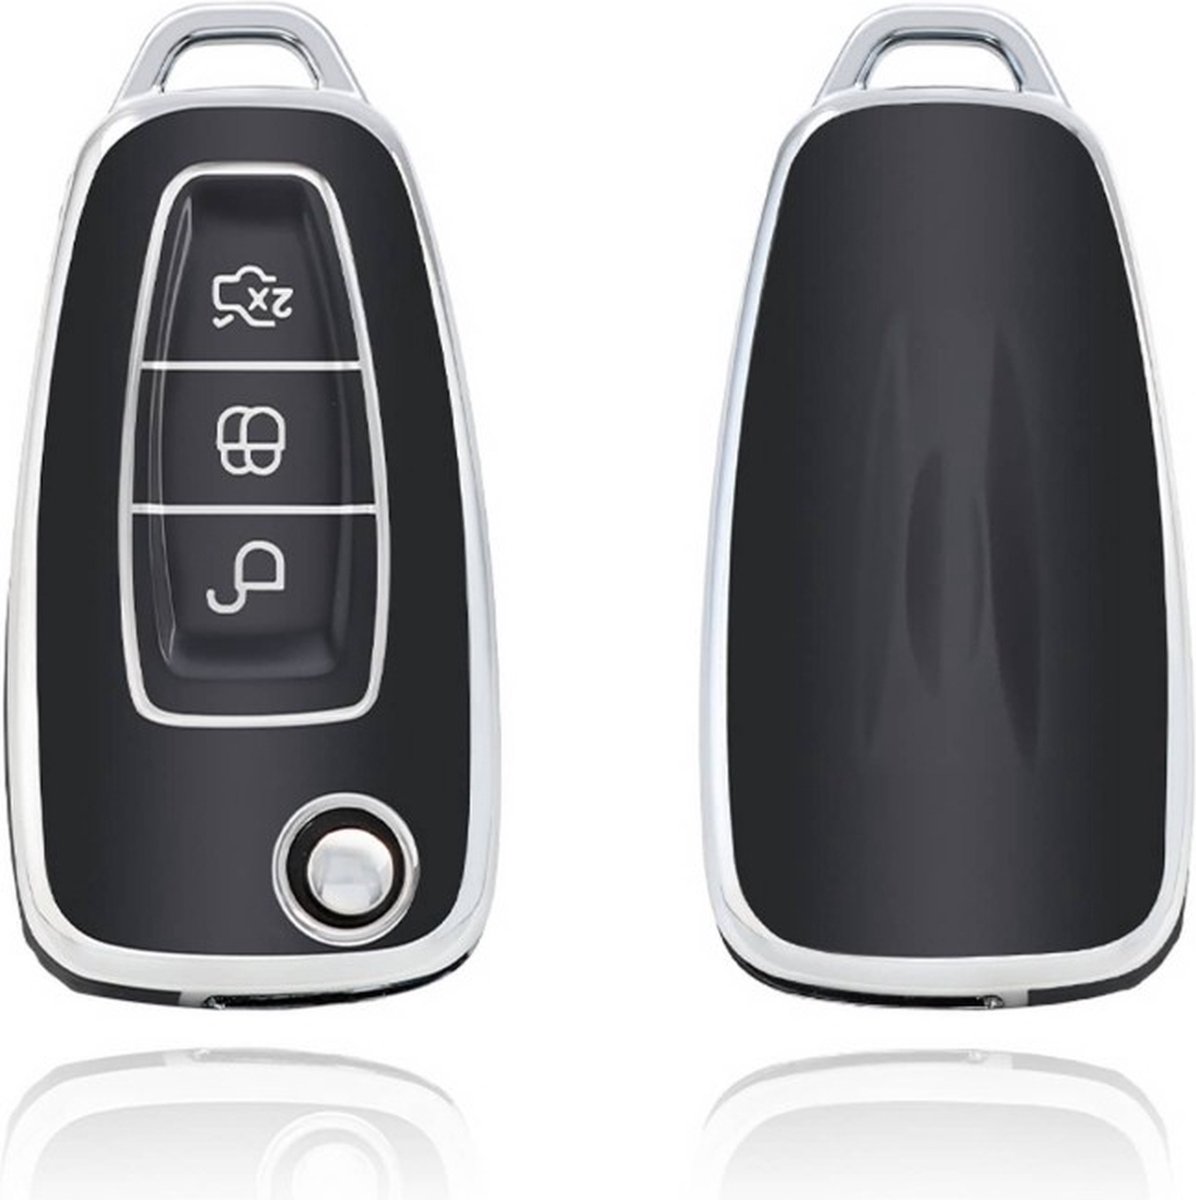 Autosleutel hoesje - TPU Sleutelhoesje - Sleutelcover - Autosleutelhoes - Geschikt voor Ford -zwart- E3 - Auto Sleutel Accessoires gadgets - Kado Cadeau man - vrouw